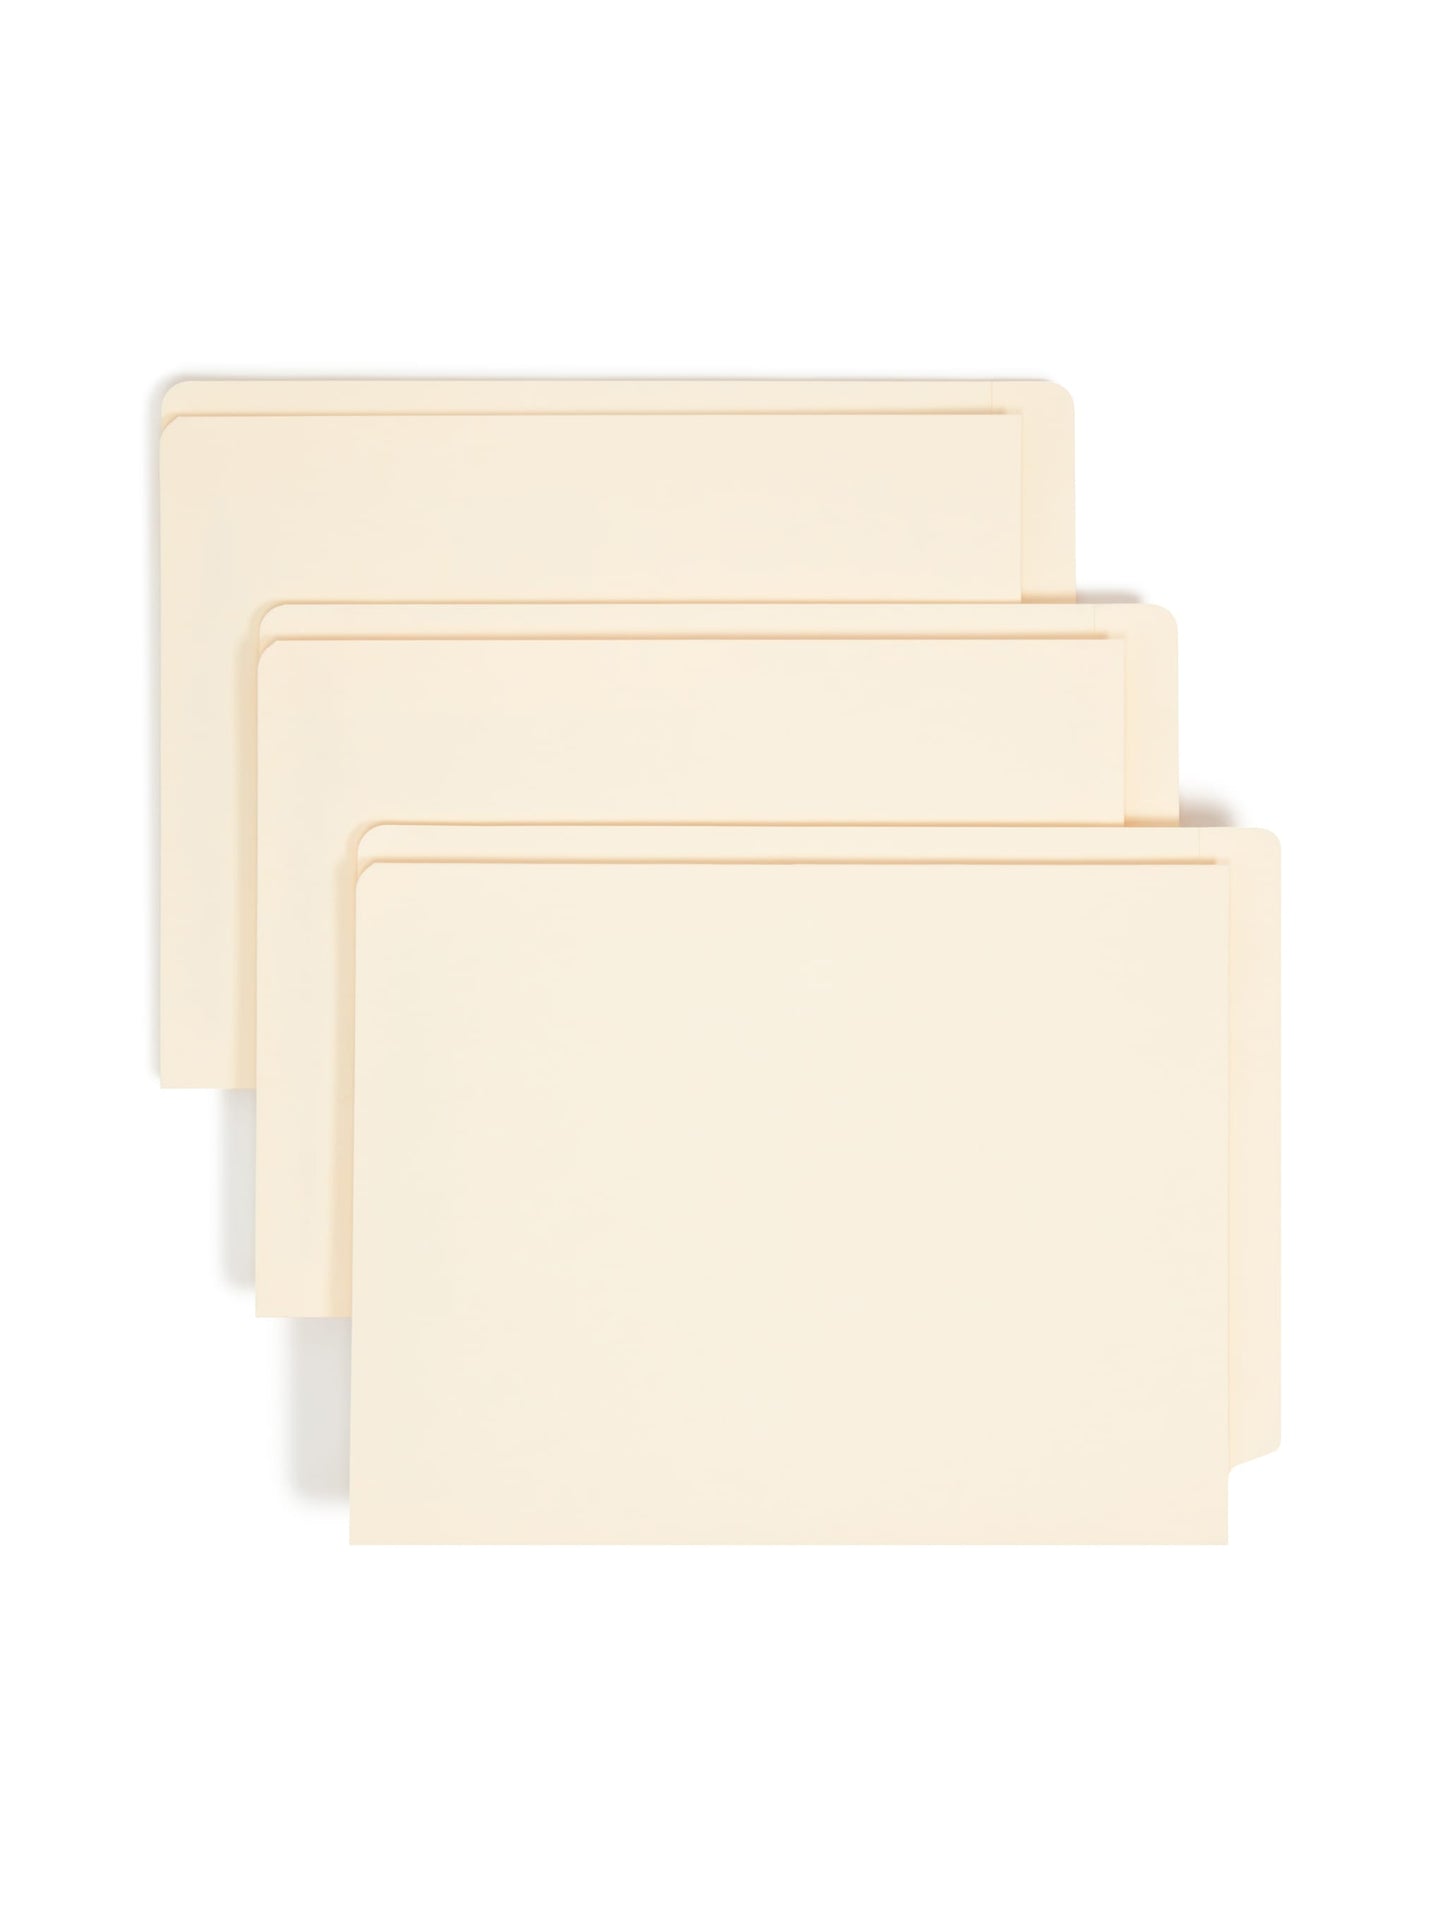 End Tab Fastener File Folder with Full Pocket, Straight-Cut Tab, 1 Pocket, Manila Color, Letter Size, Set of 50, 086486341004